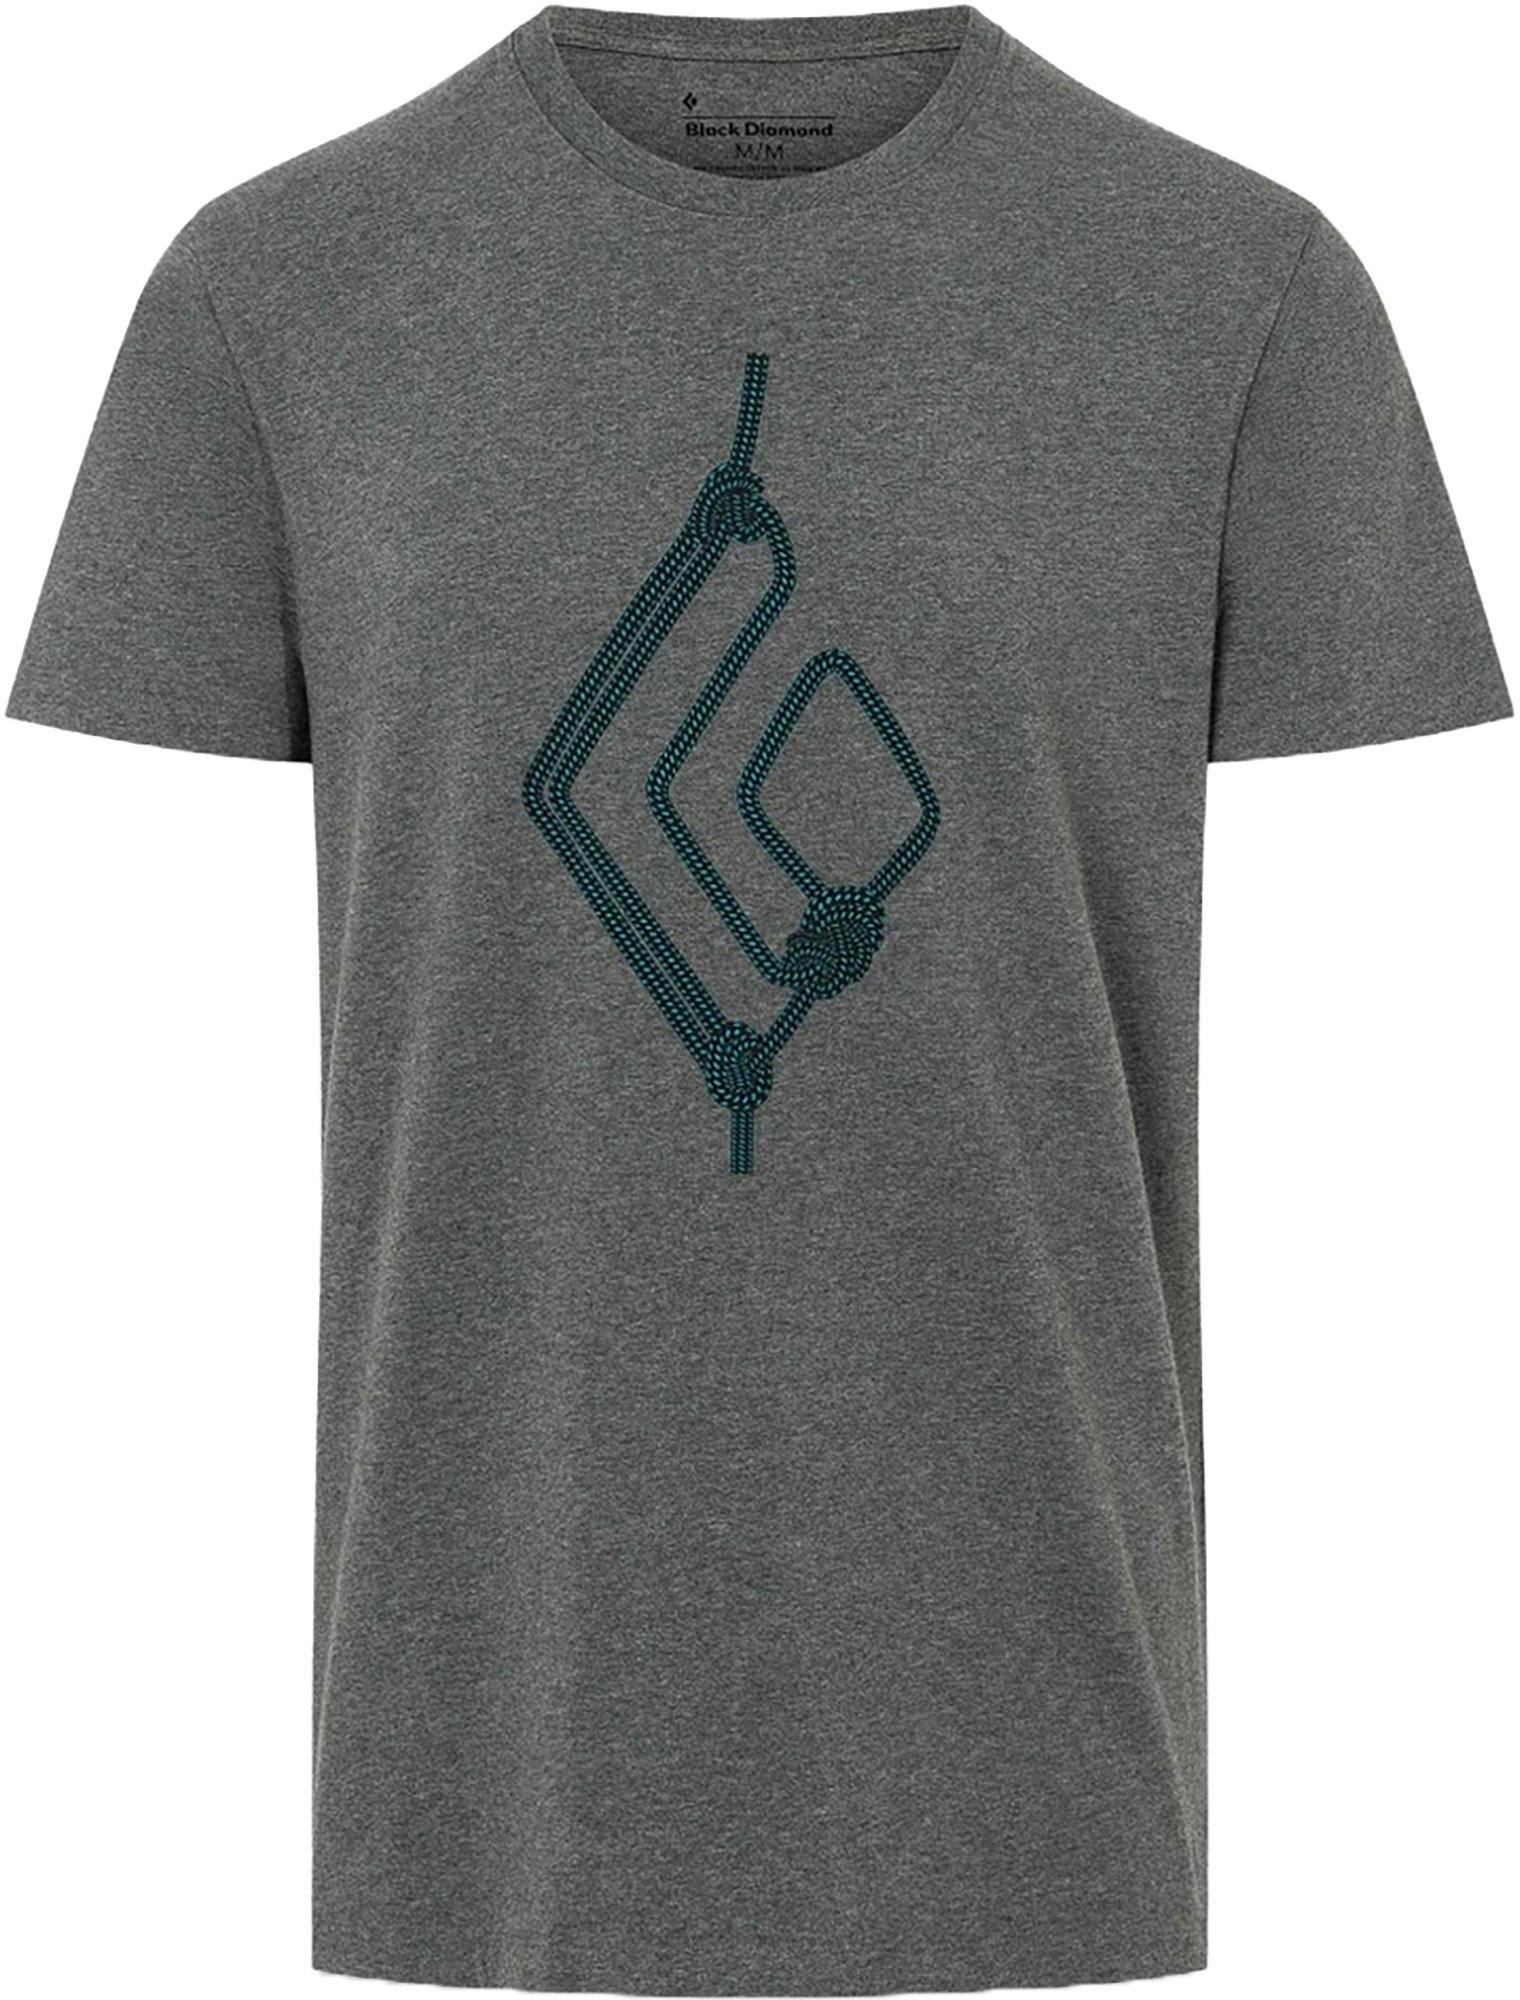 Product image for Rope Diamond Short Sleeve T-shirt - Men's